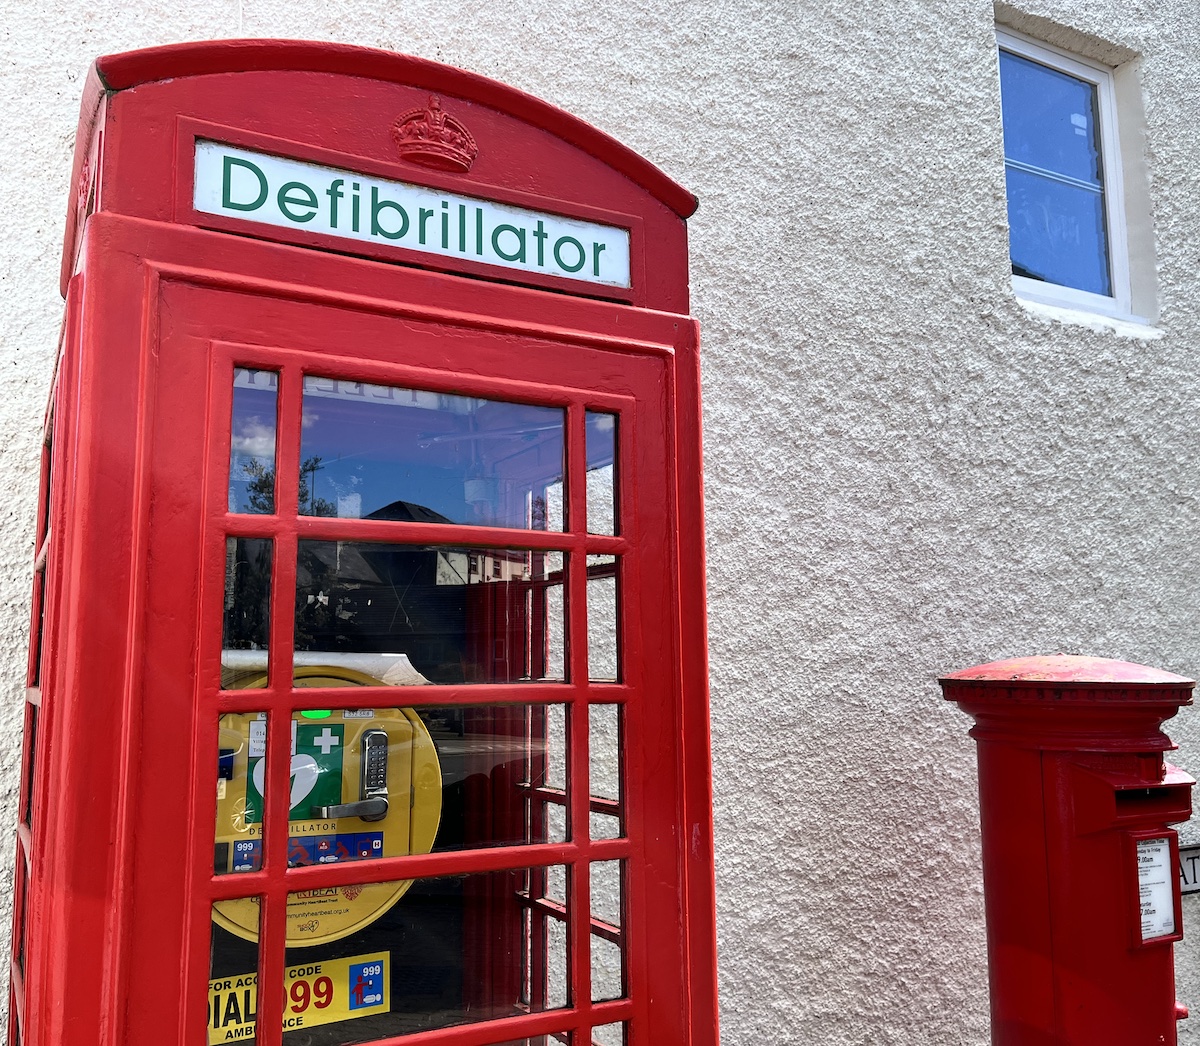 cabine telefoniche rosse inglesi inghilterra